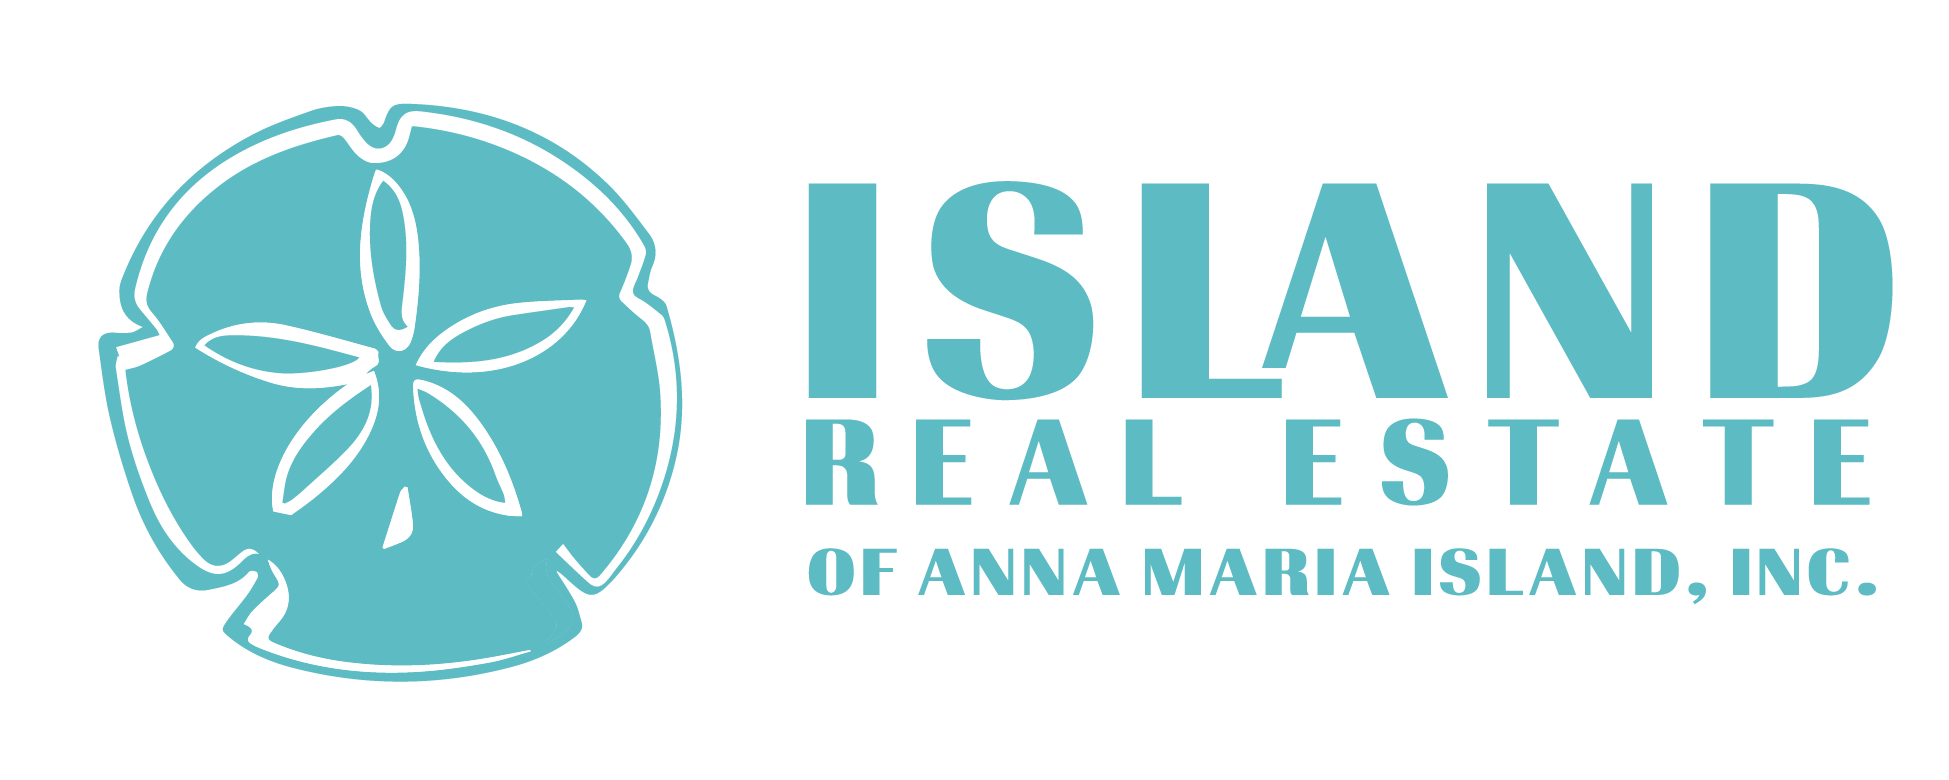 Island Real Estate logo